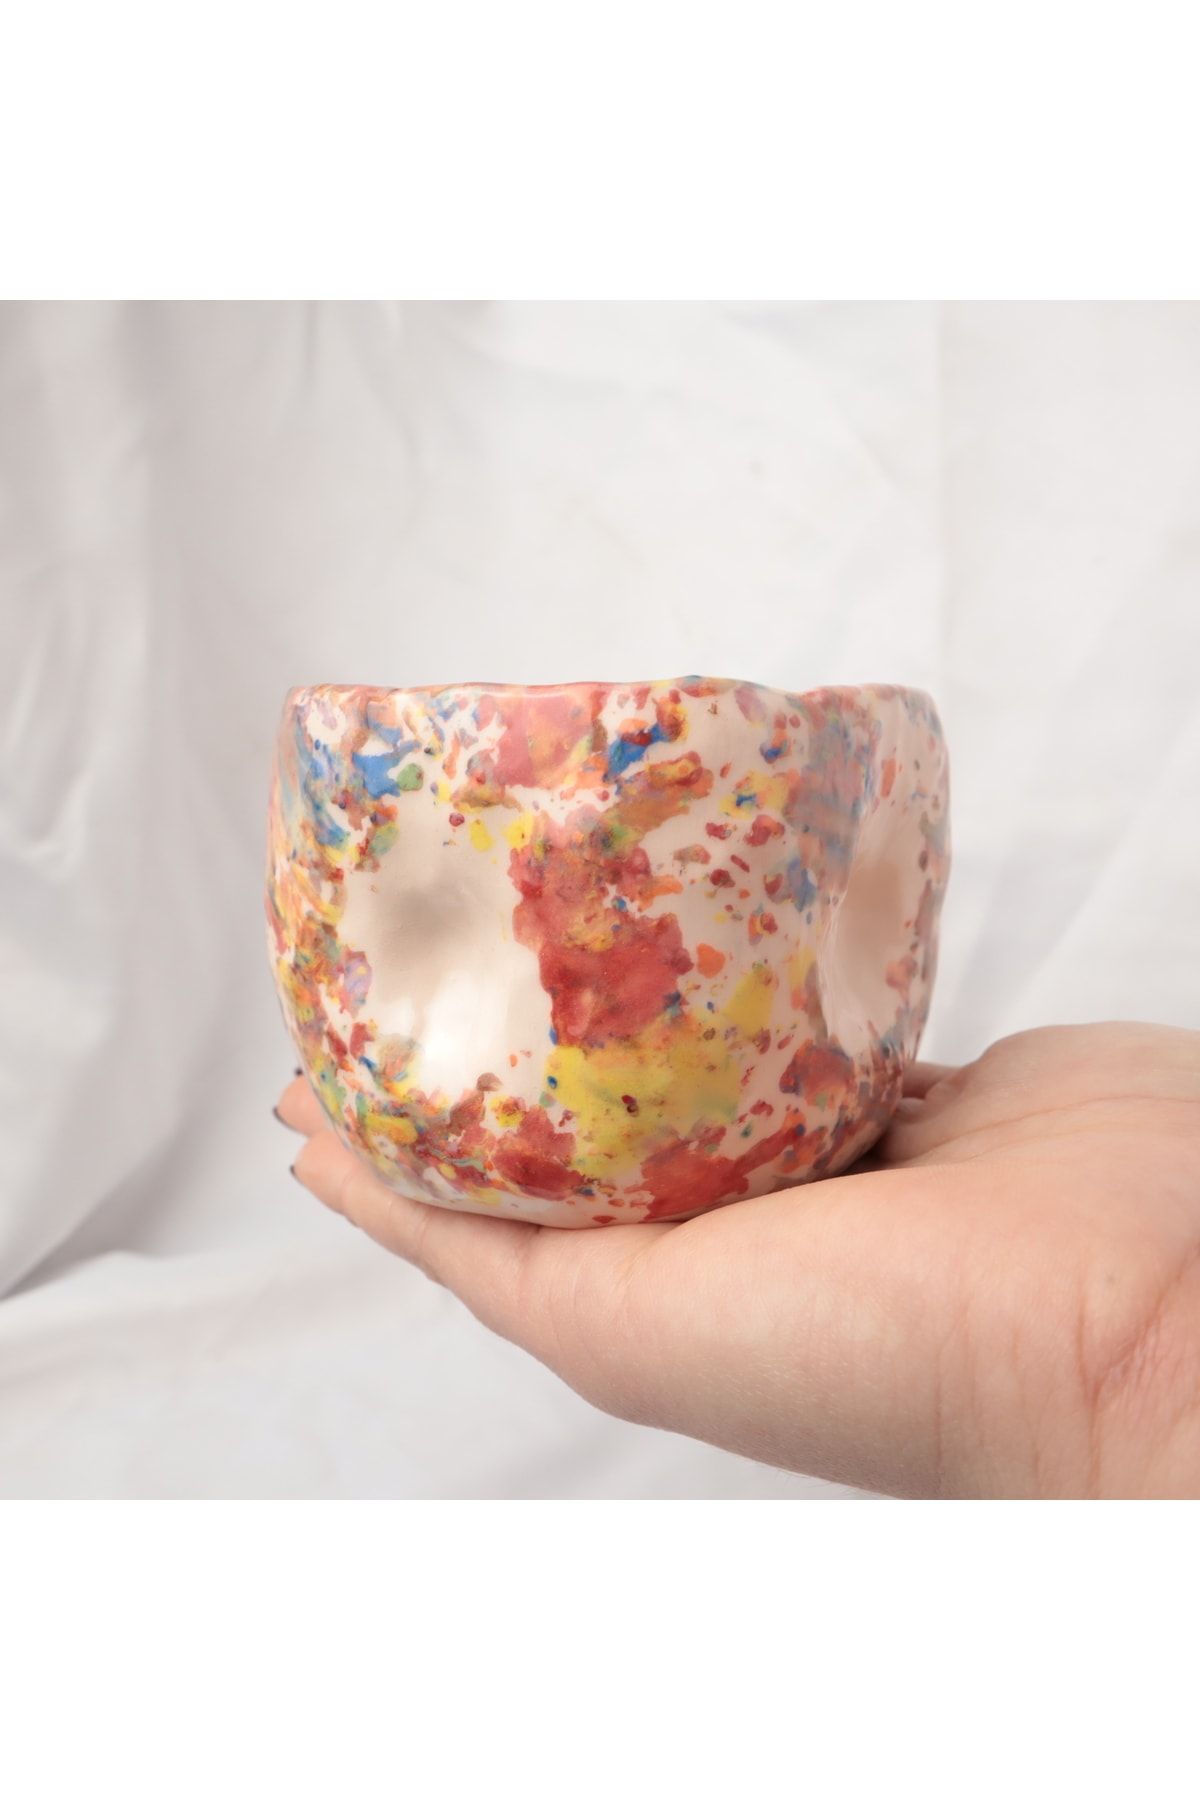 Lily & Loly Ceramics Splash Serisi Karışık Renkli Sıçratma El Yapımı Seramik Mug 200ml